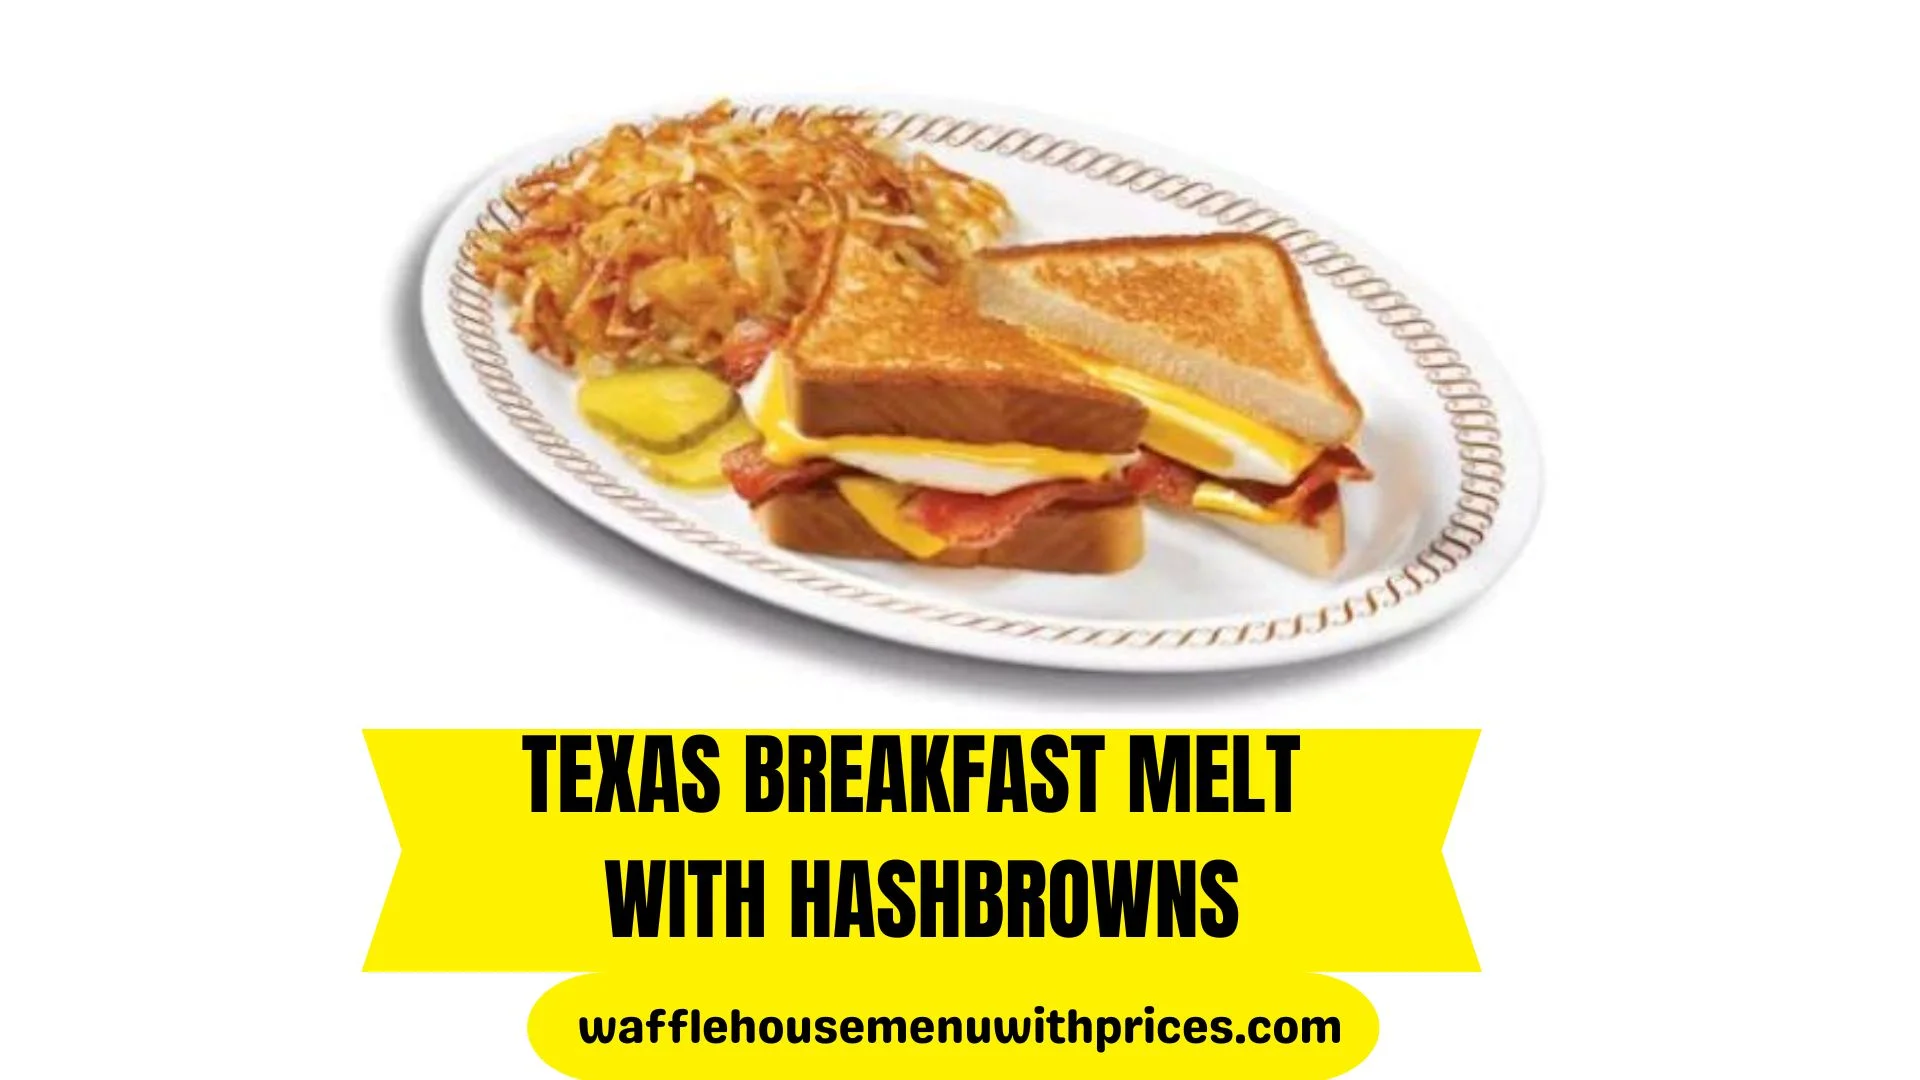 Texas Breakfast Melt With Hashbrowns